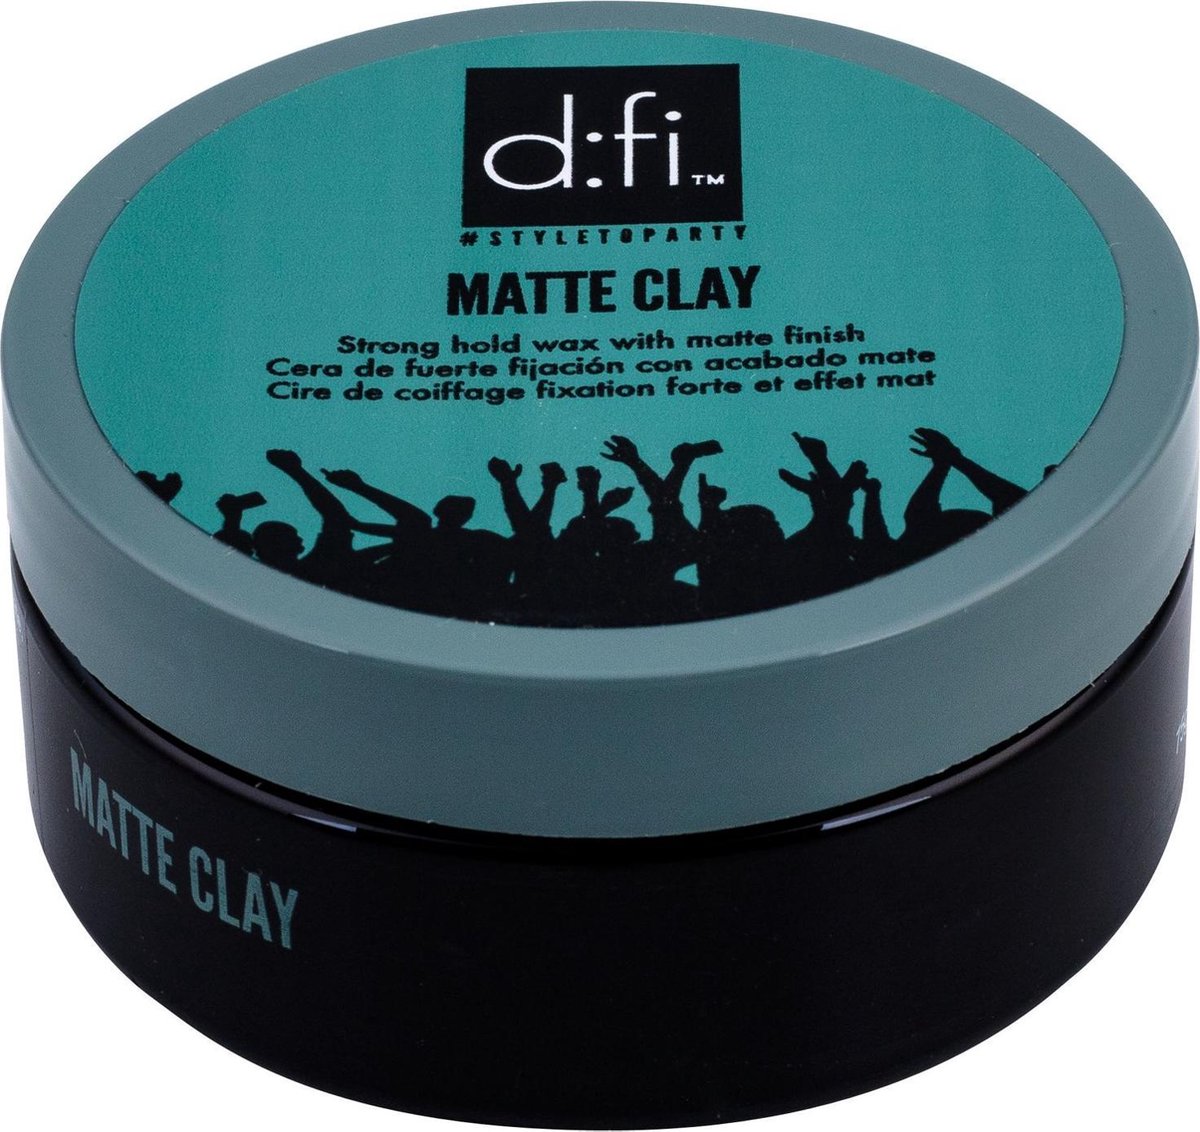 Revlon Professional - Matte Clay d:fi (Strong Hold Wax With Matte Finish) 75 g - 75.0g - Revlon Professional